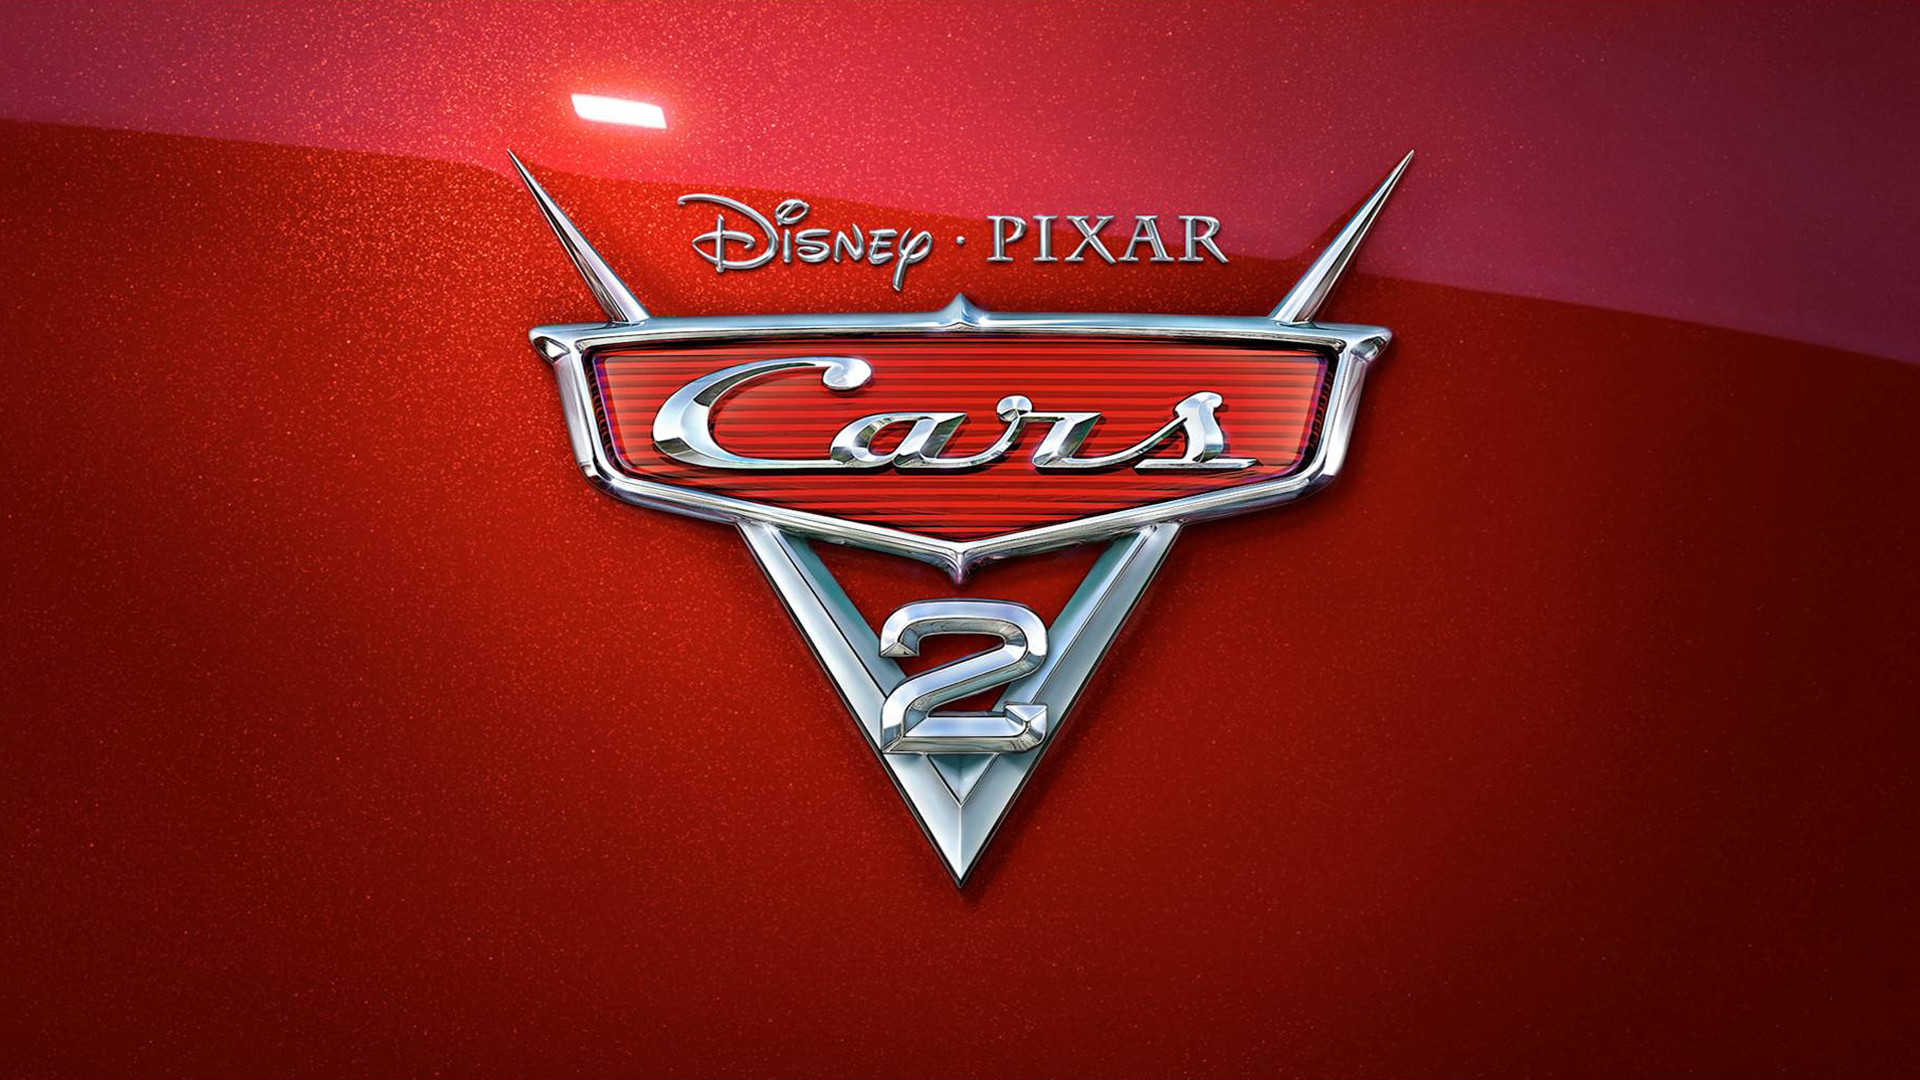 1920x1080 Disney Pixar Cars 2 2011